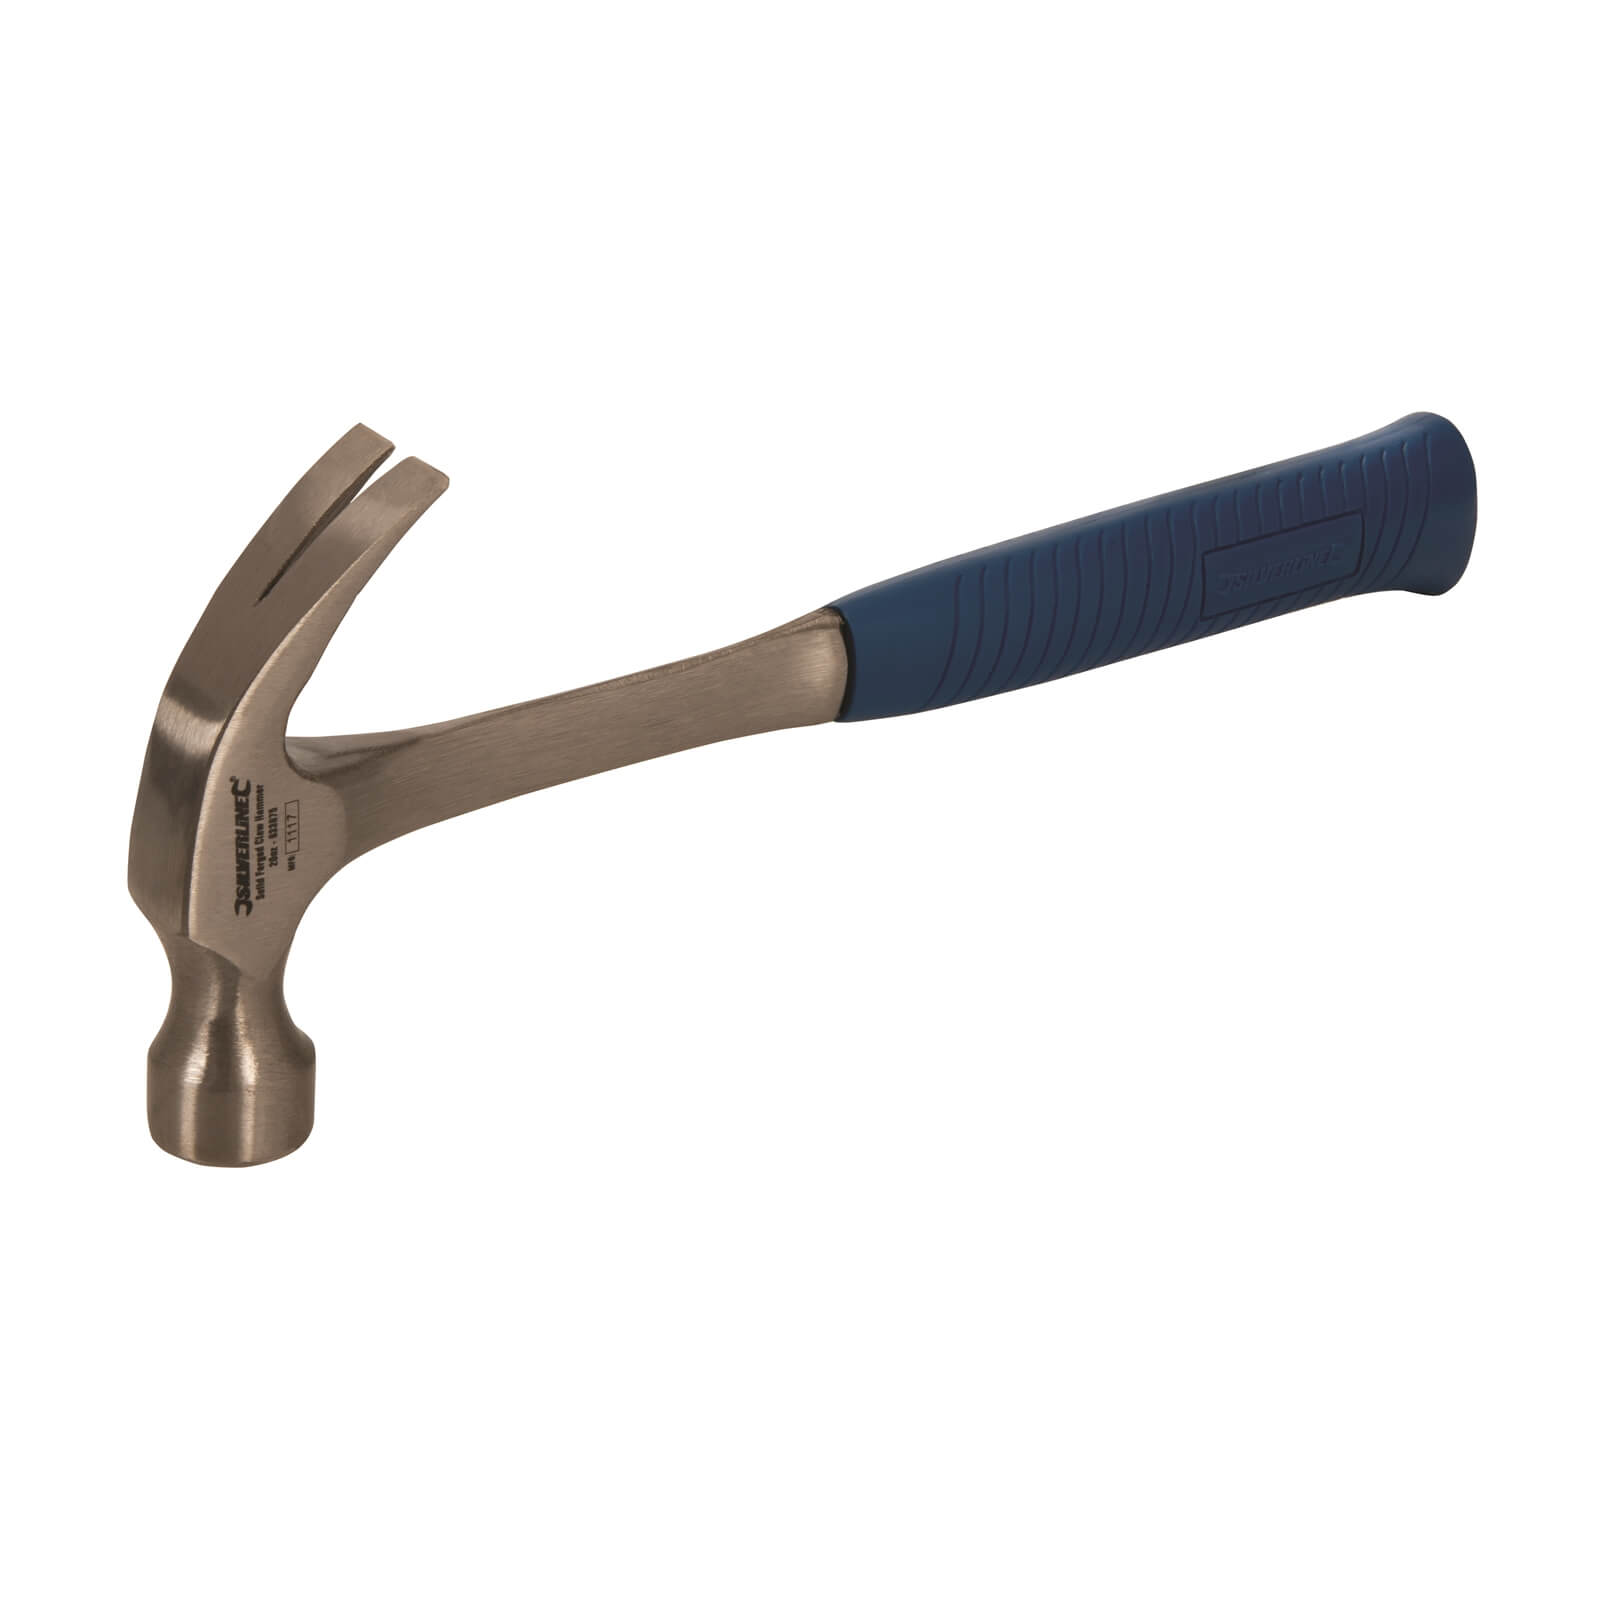 Silverline Solid Forged Claw Hammer - 20oz (567g)